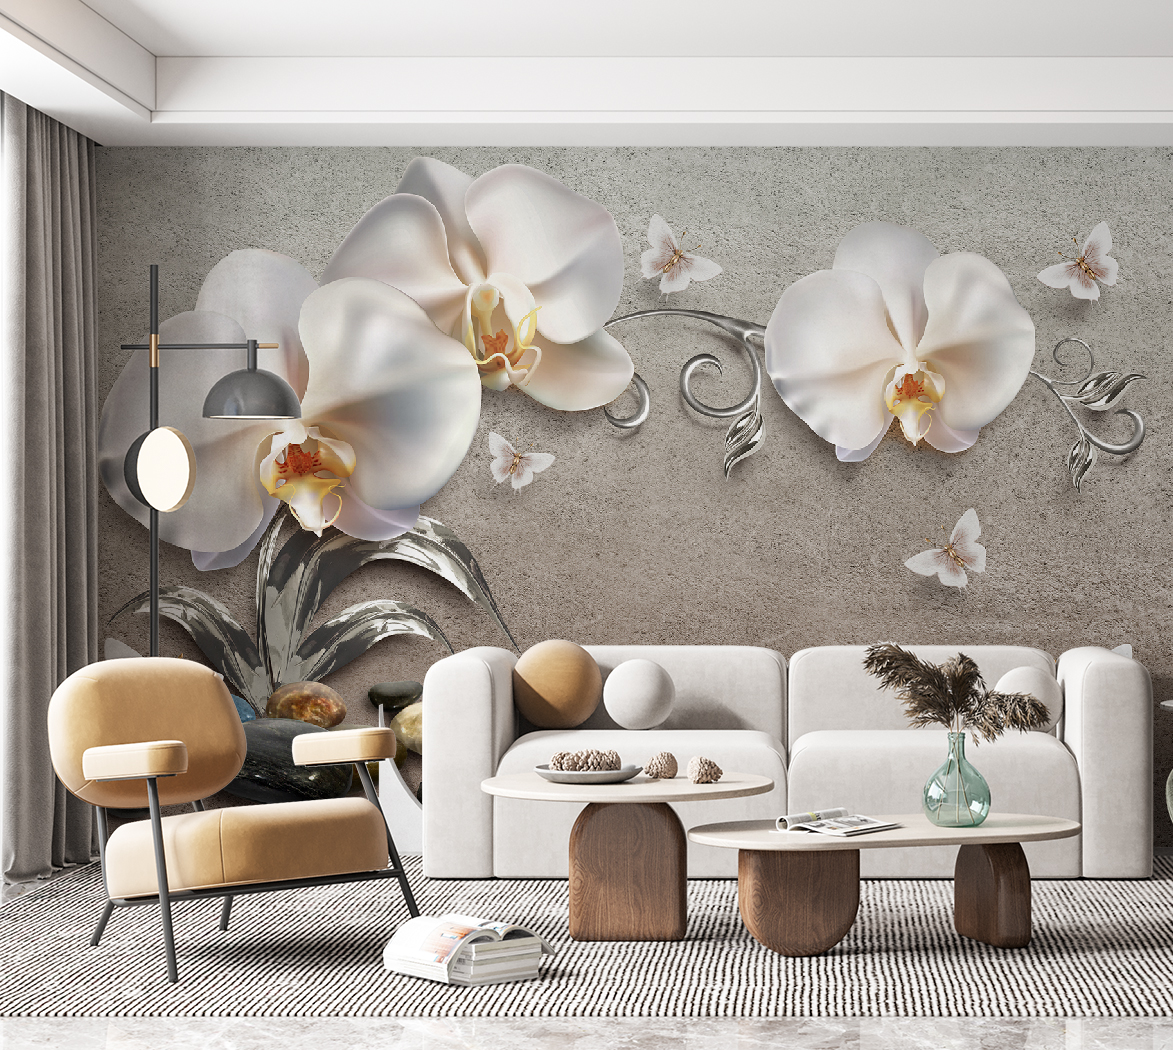 Фотообои Photostena 3D Белые орхидеи 4,08 x 2,65 м фотообои photostena 3d арка с ветками орхидеи 1 62 x 2 5 м